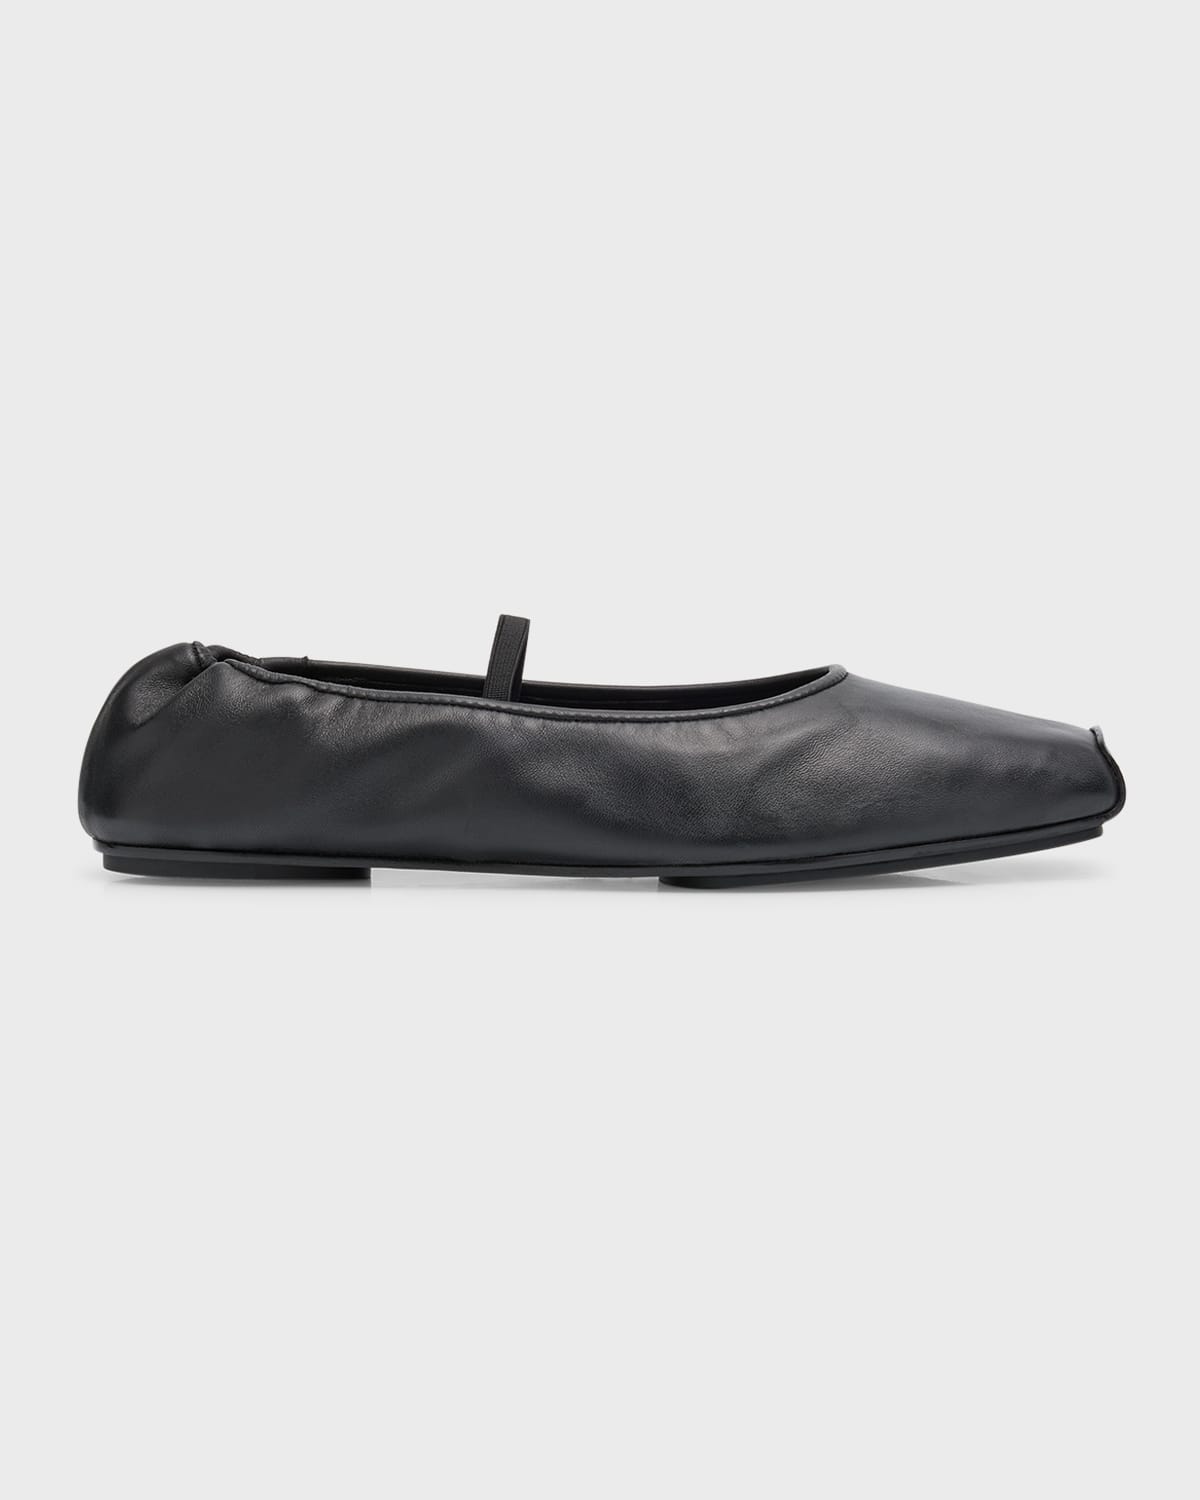 Tory Burch Mixed Leather Cap-Toe Ballerina Flats | Neiman Marcus